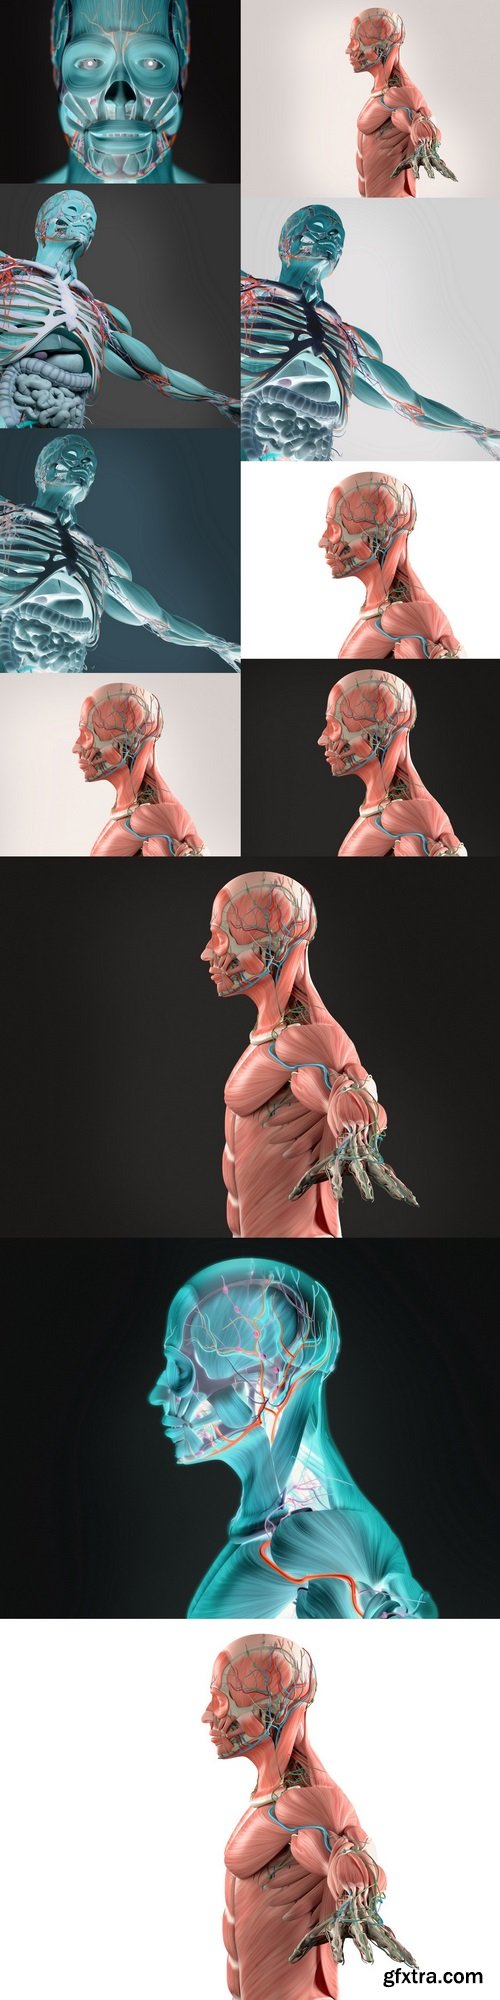 Human anatomy xray